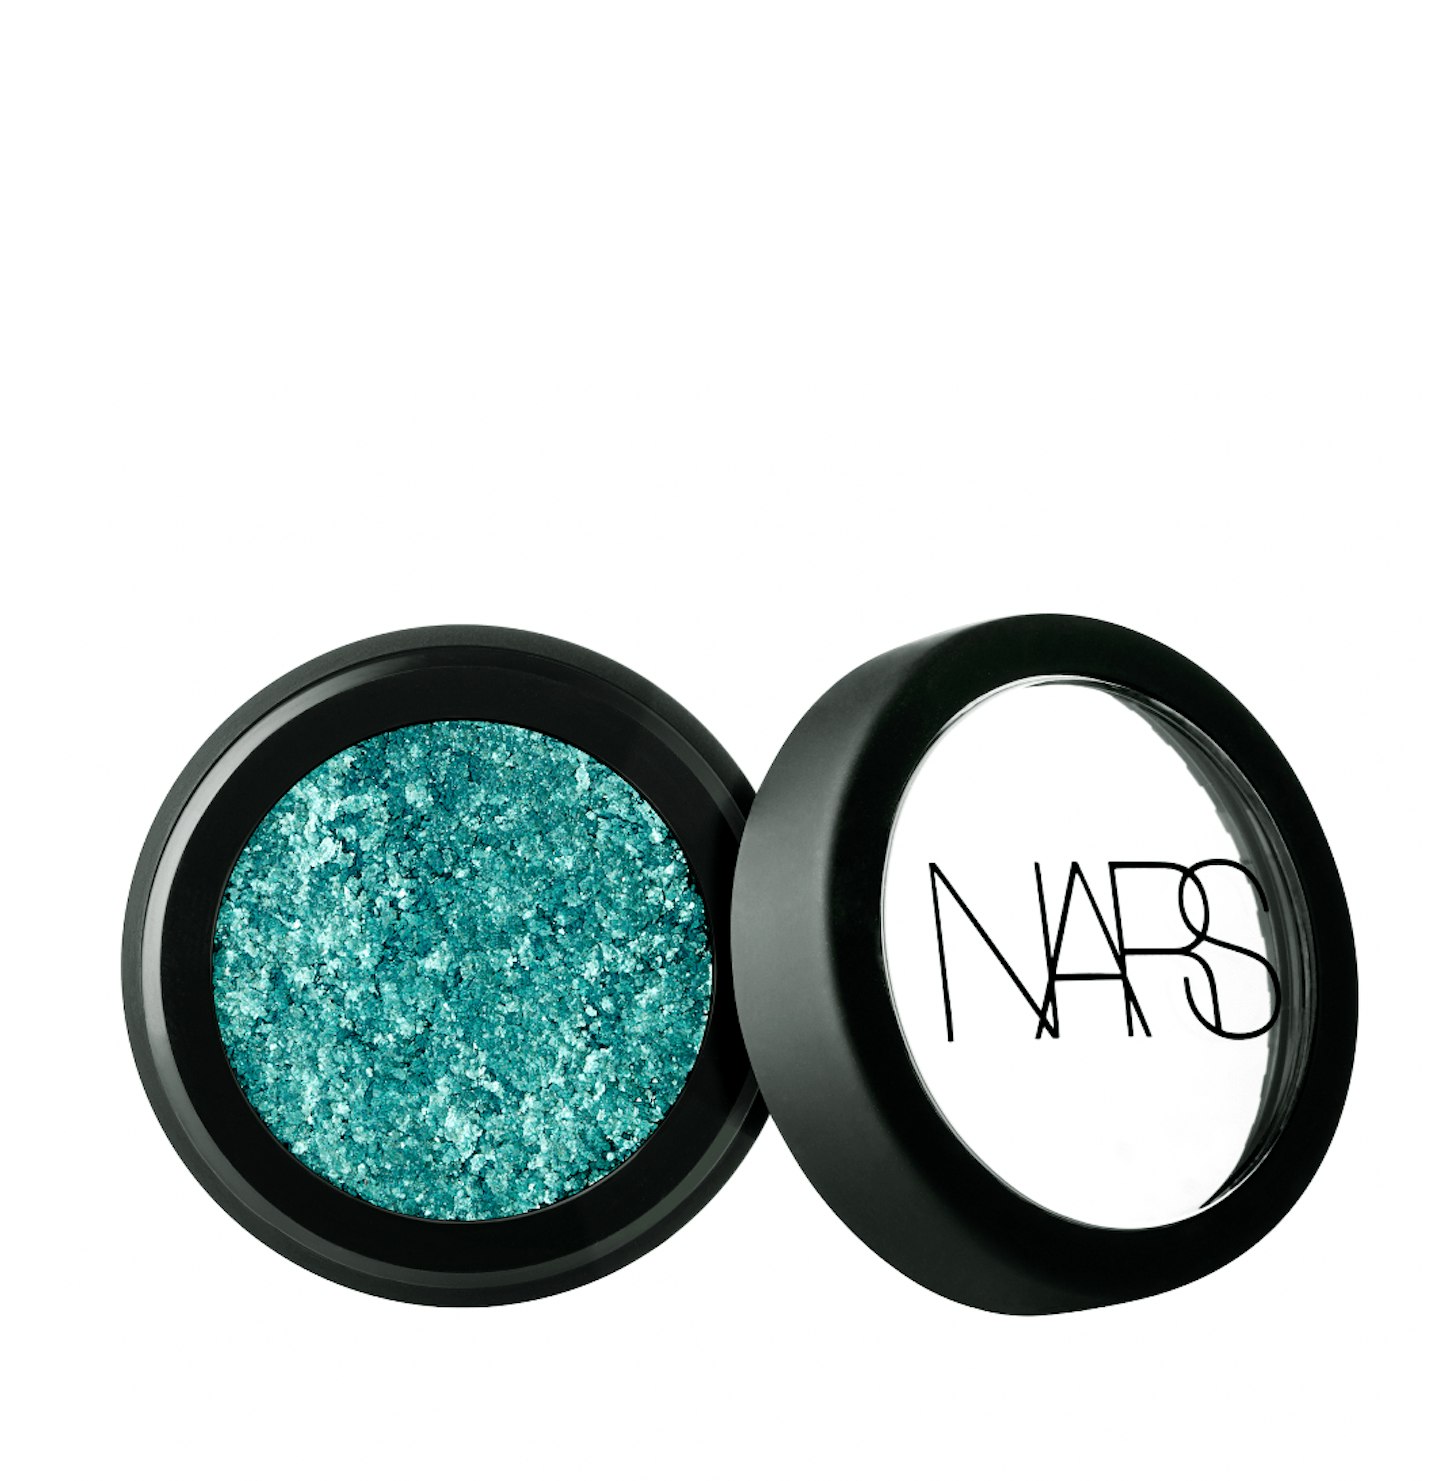 NARS Powerchrome Loose Eye Pigment in Islamorada